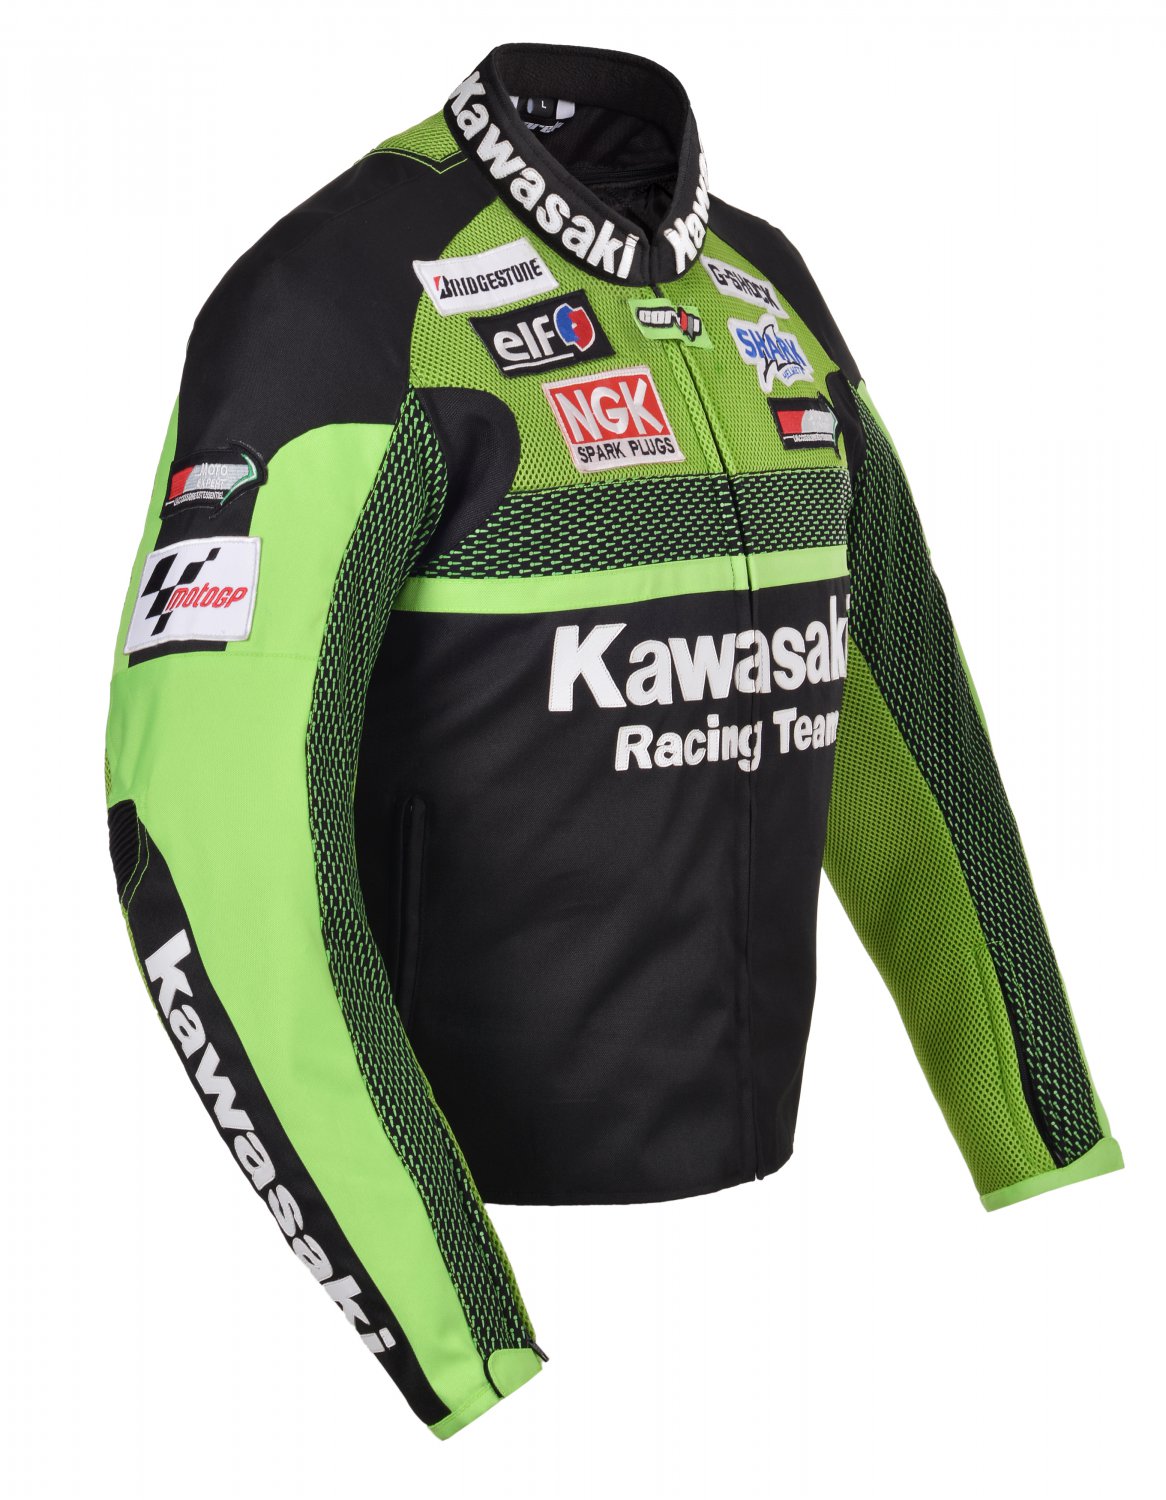 Kawasaki Racing Team Motorcycle Textile Jacket